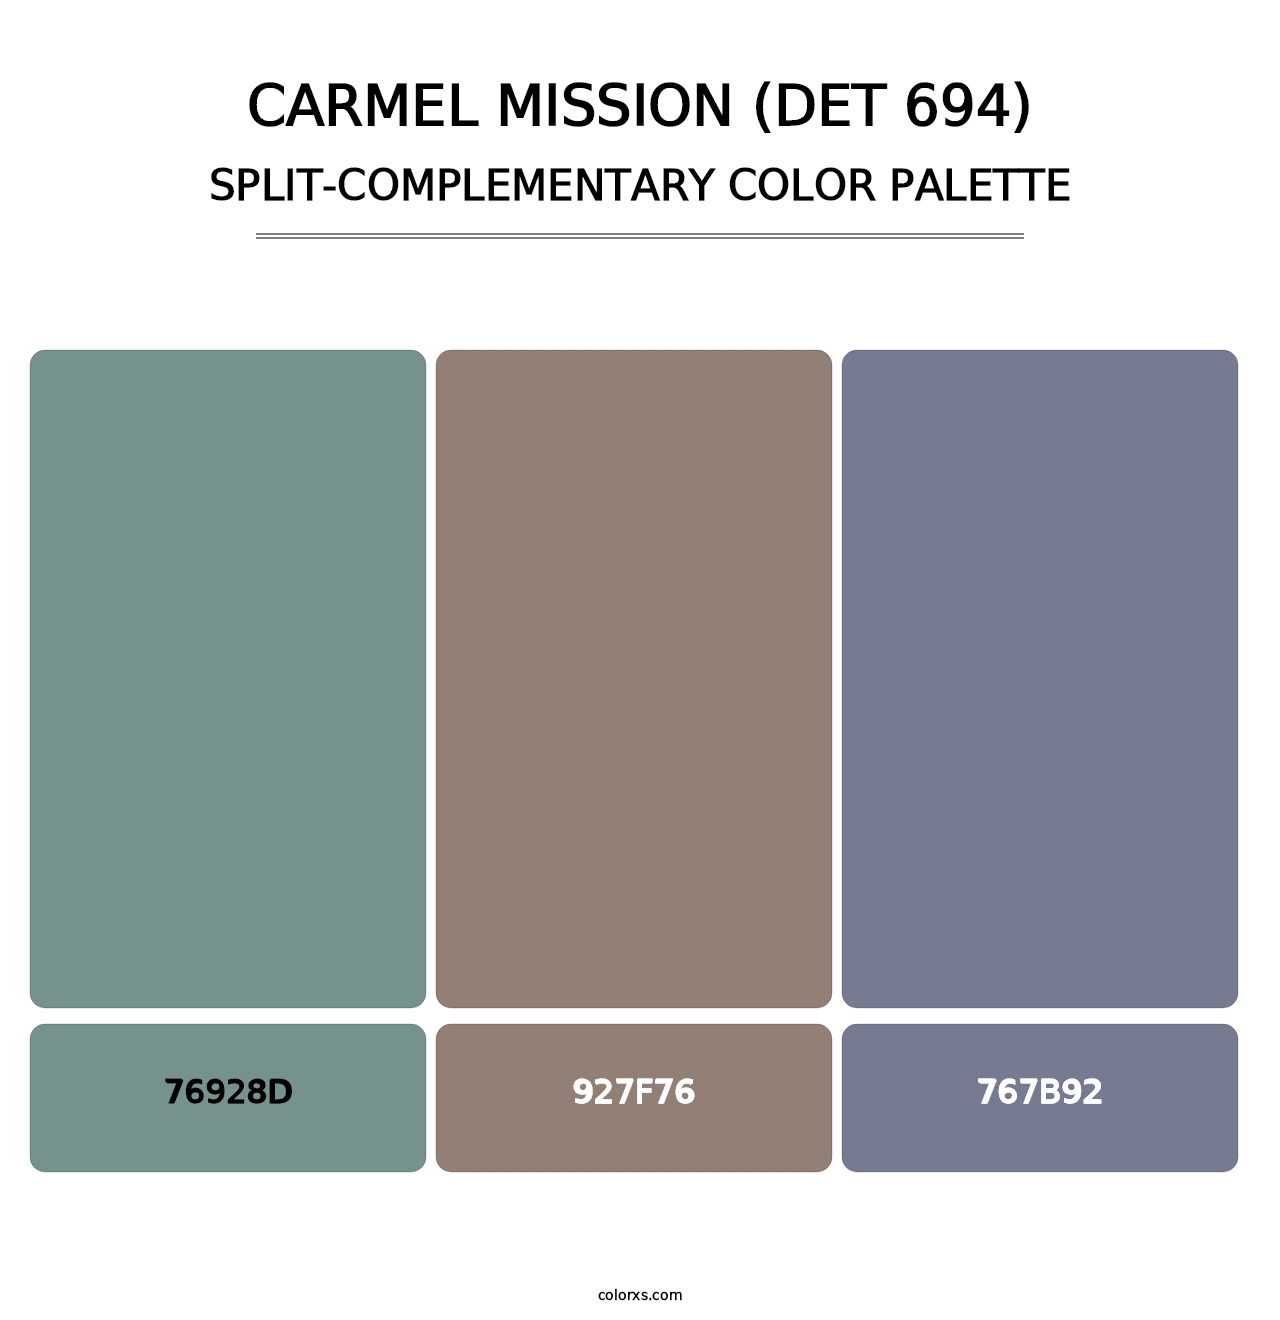 Carmel Mission (DET 694) - Split-Complementary Color Palette